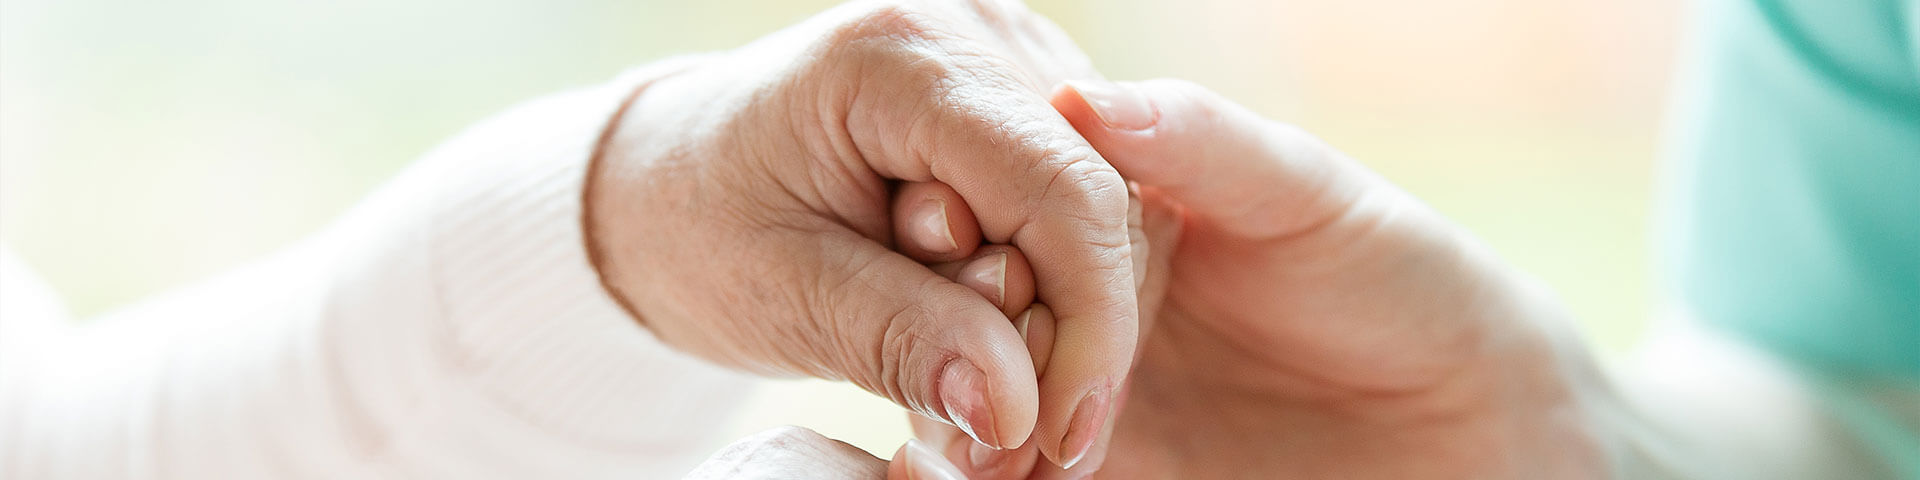 Pflegerin hällt Hände einer älteren Frau